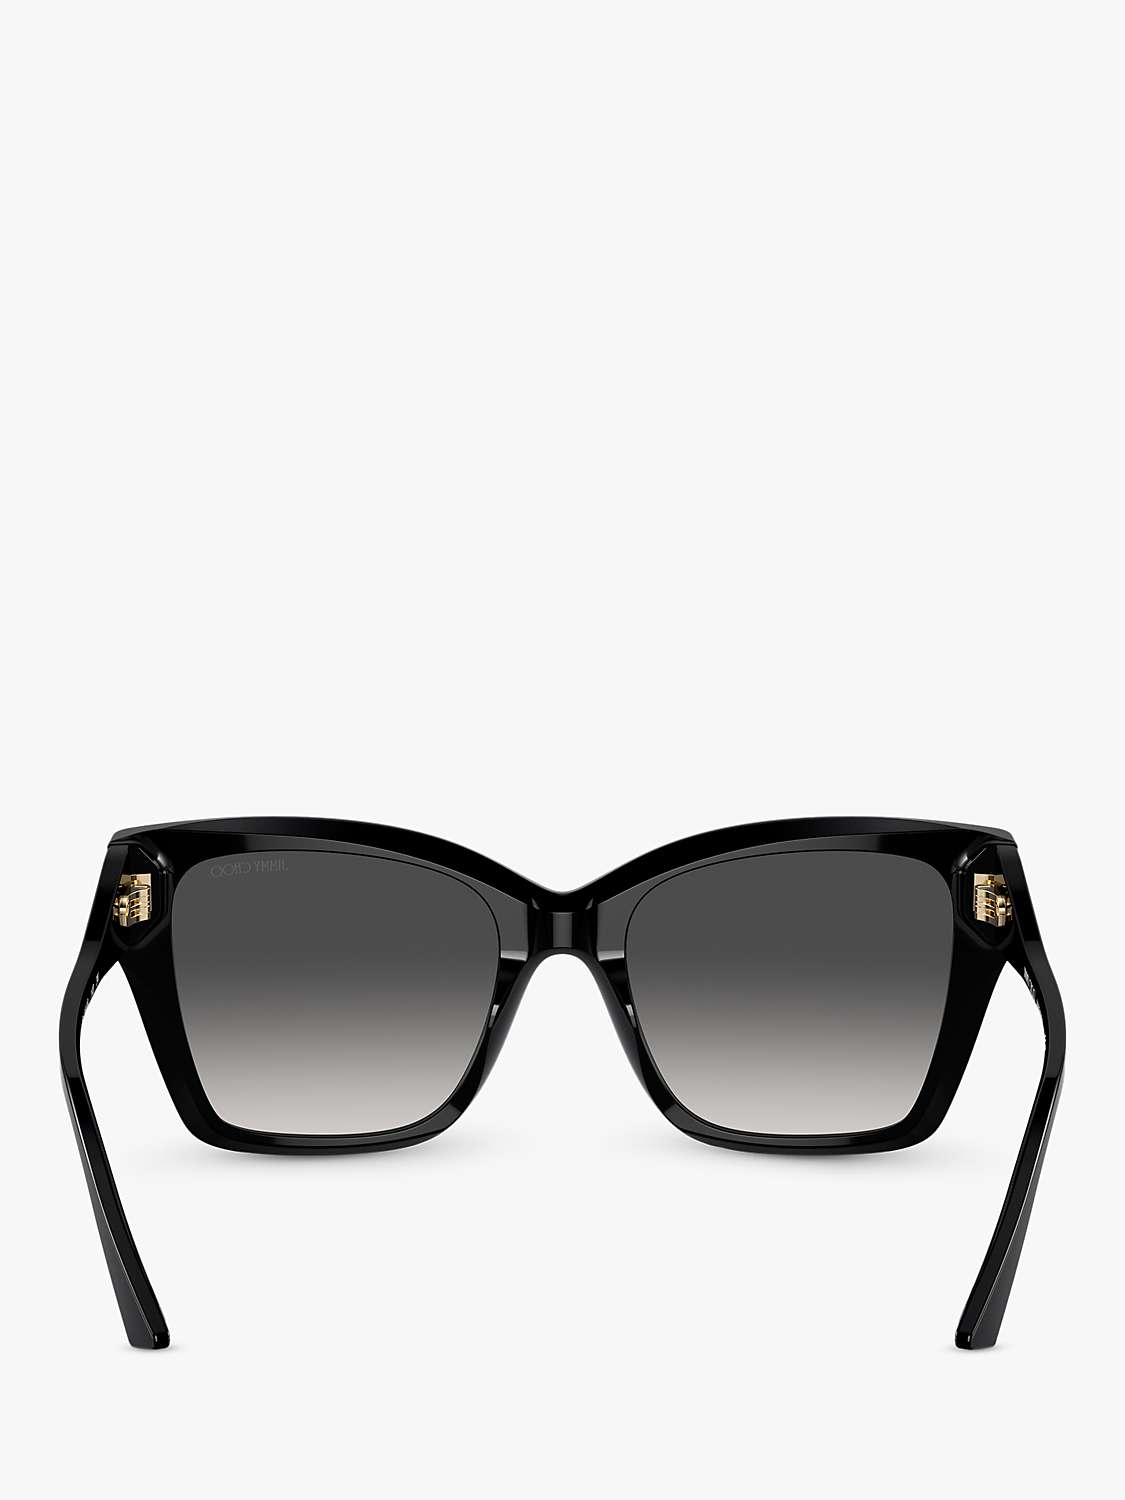 Buy Jimmy Choo JC5012 Women's Irregular Sunglasses, Black/Grey Gradient Online at johnlewis.com